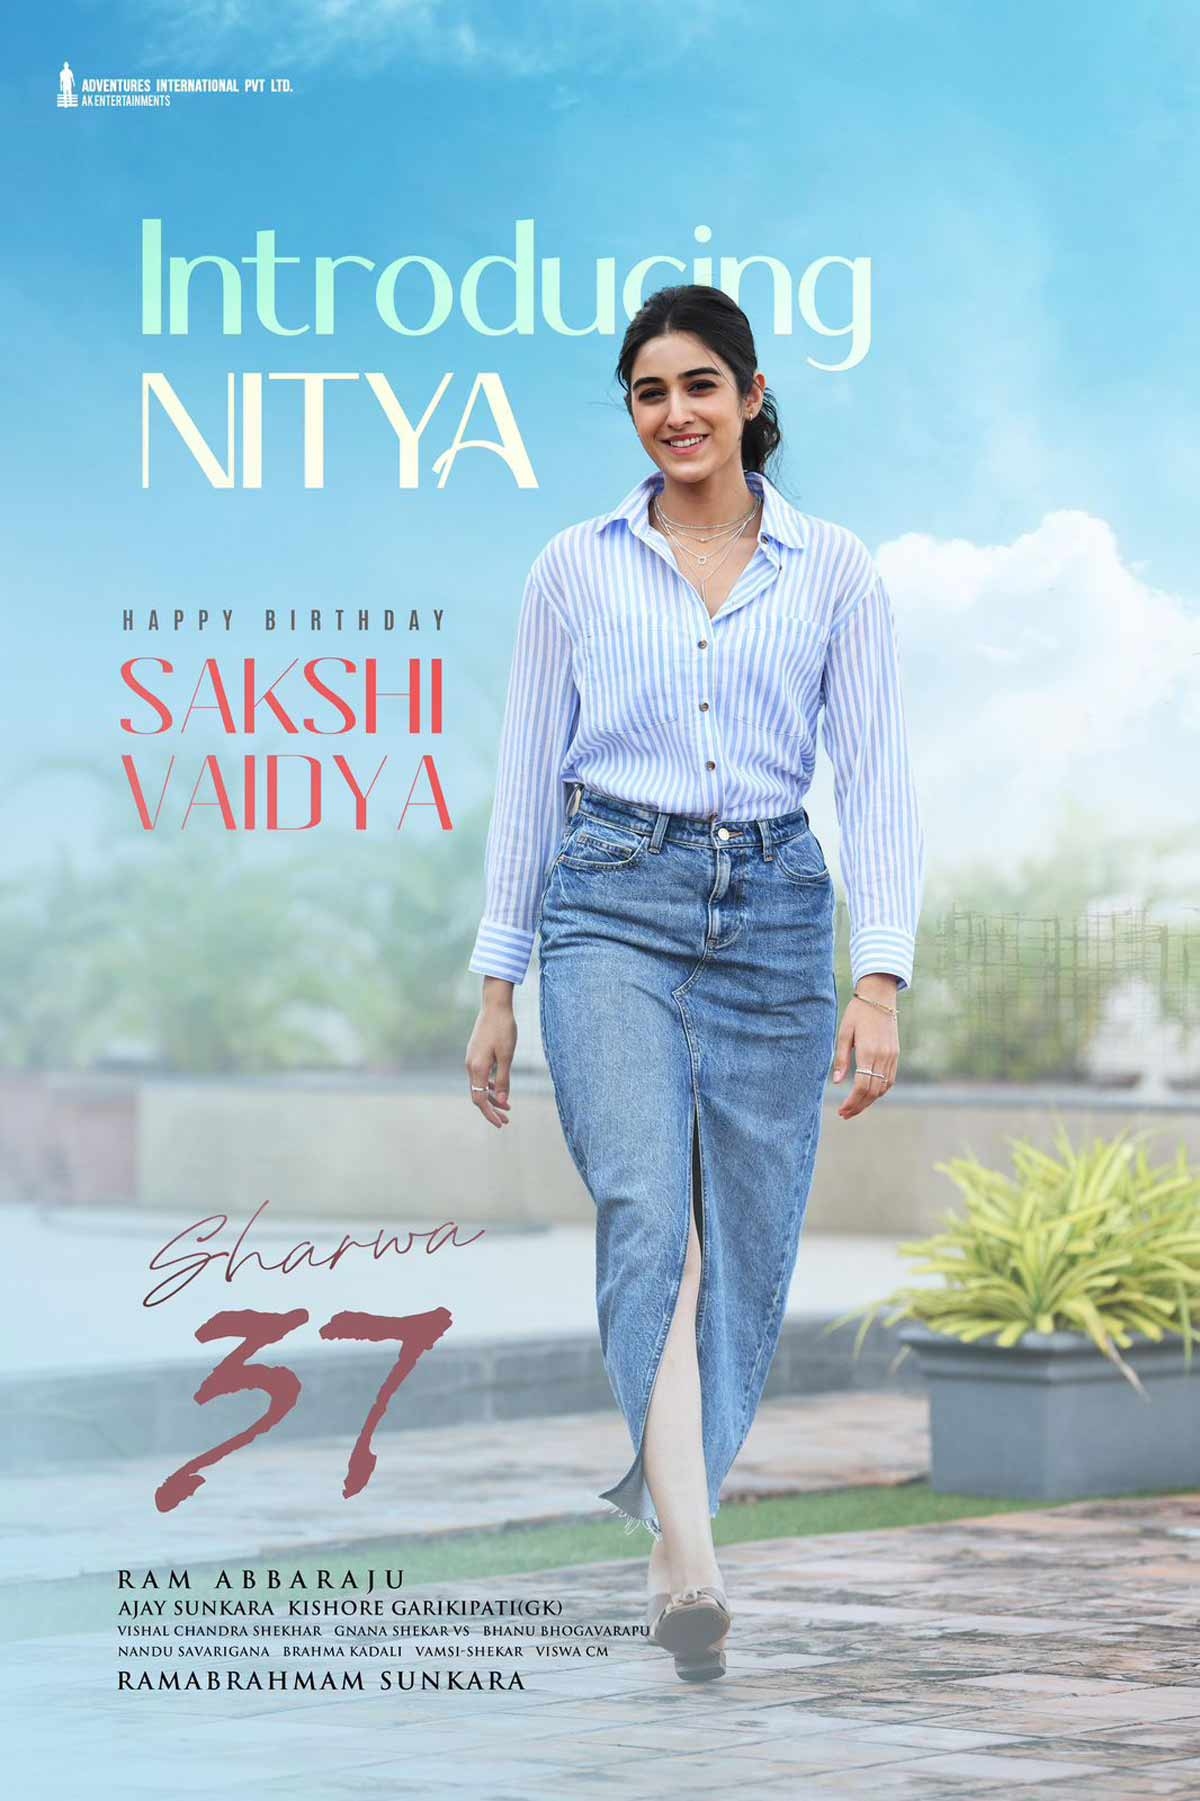 Sakshi Vaidya turns trendy as Nitya for Sharwa37